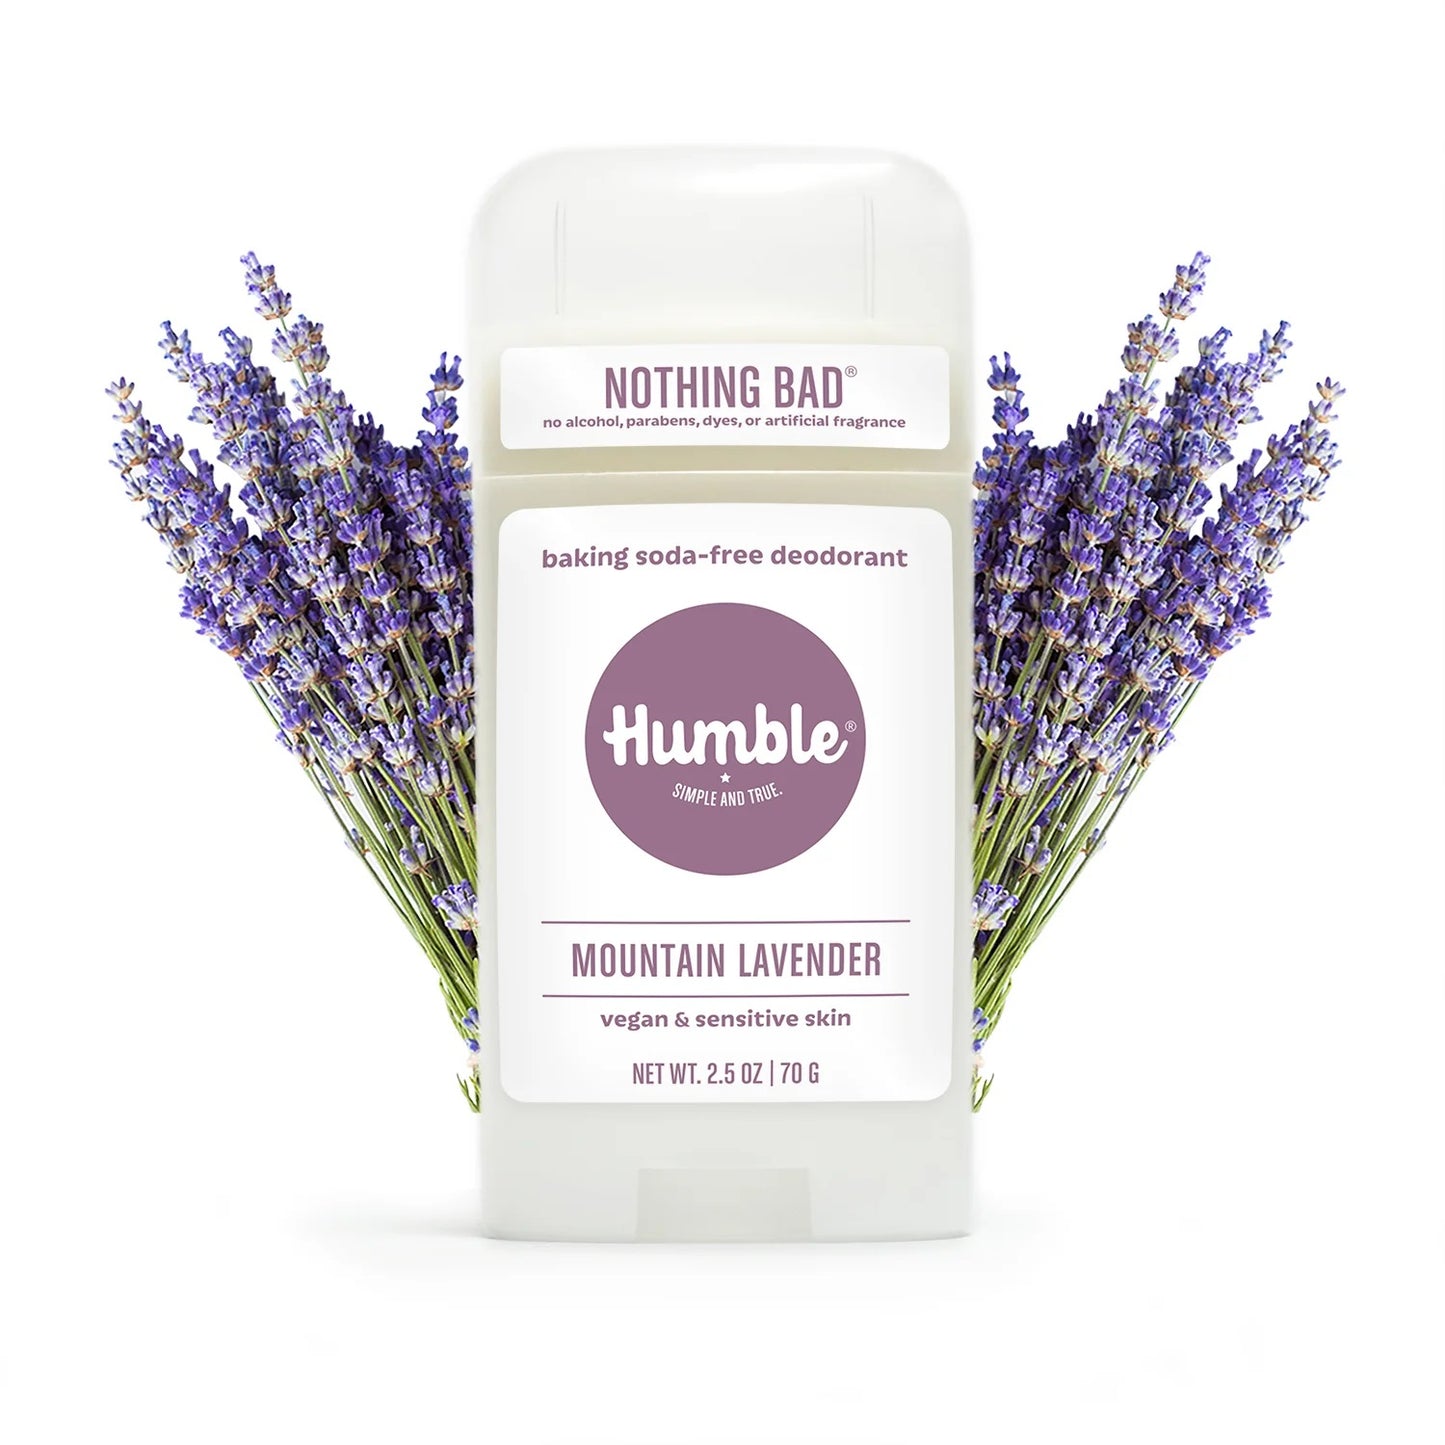 HUMBLE DEODORANT Vegan Mountain Lavender Deodorant